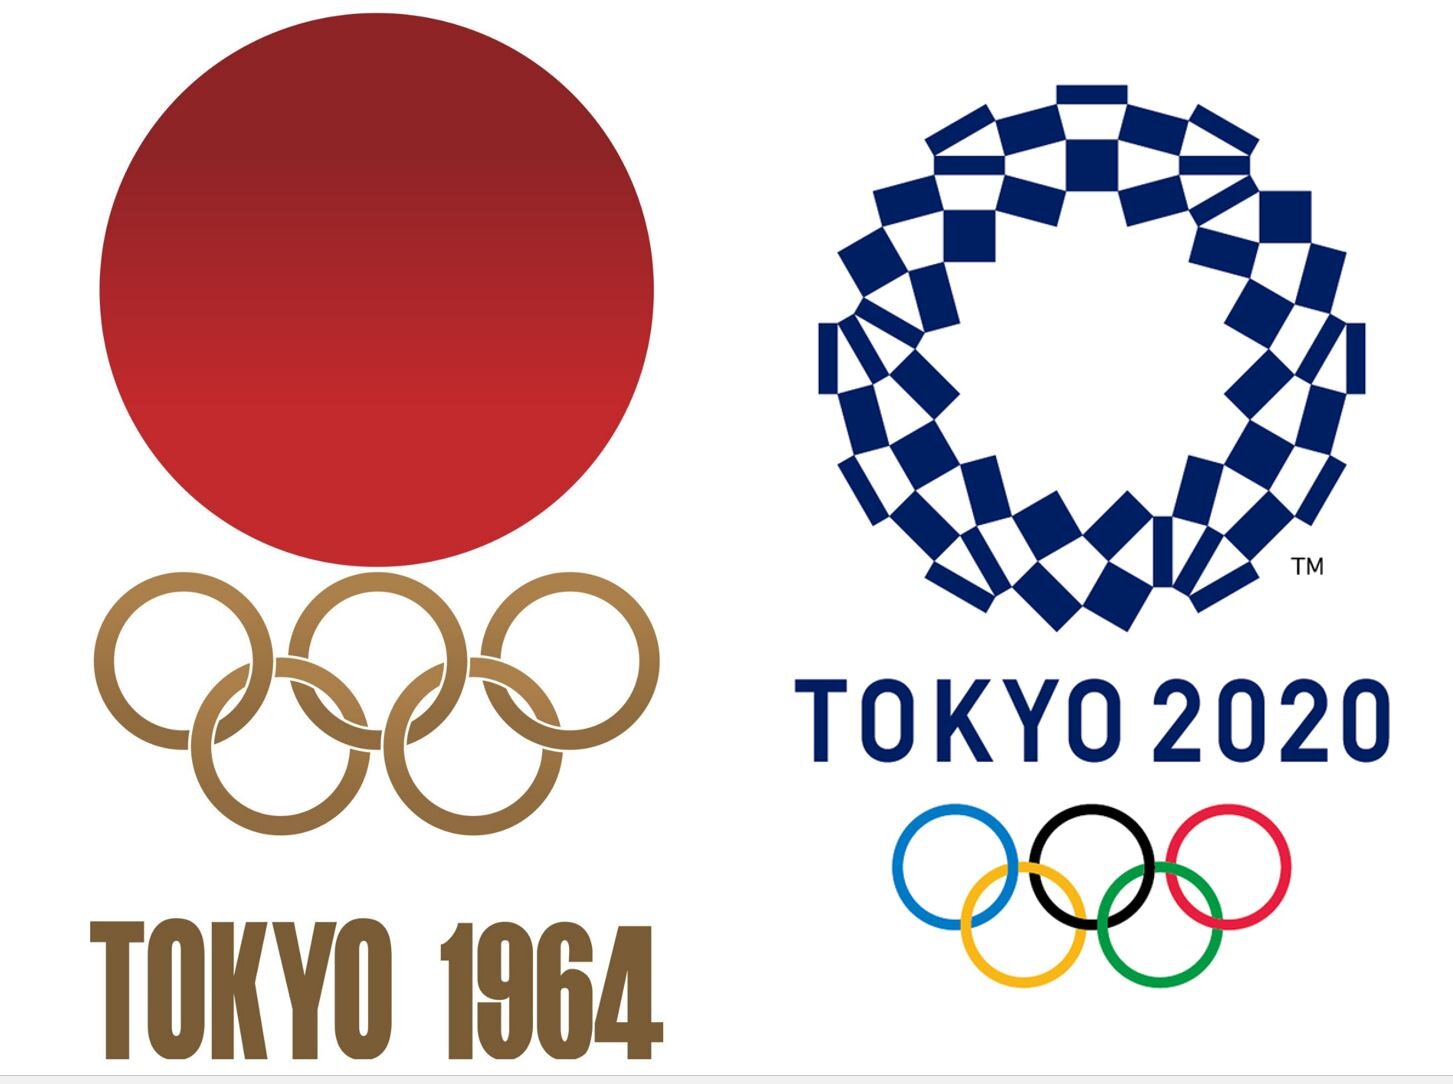 Задача на олимпийских играх в токио. Олимпийских игр. (Токио, 1964 г.). Власов. Олимпийские игры в Токио 1964. Токио 2020. Логотип олимпиады Токио 1964.